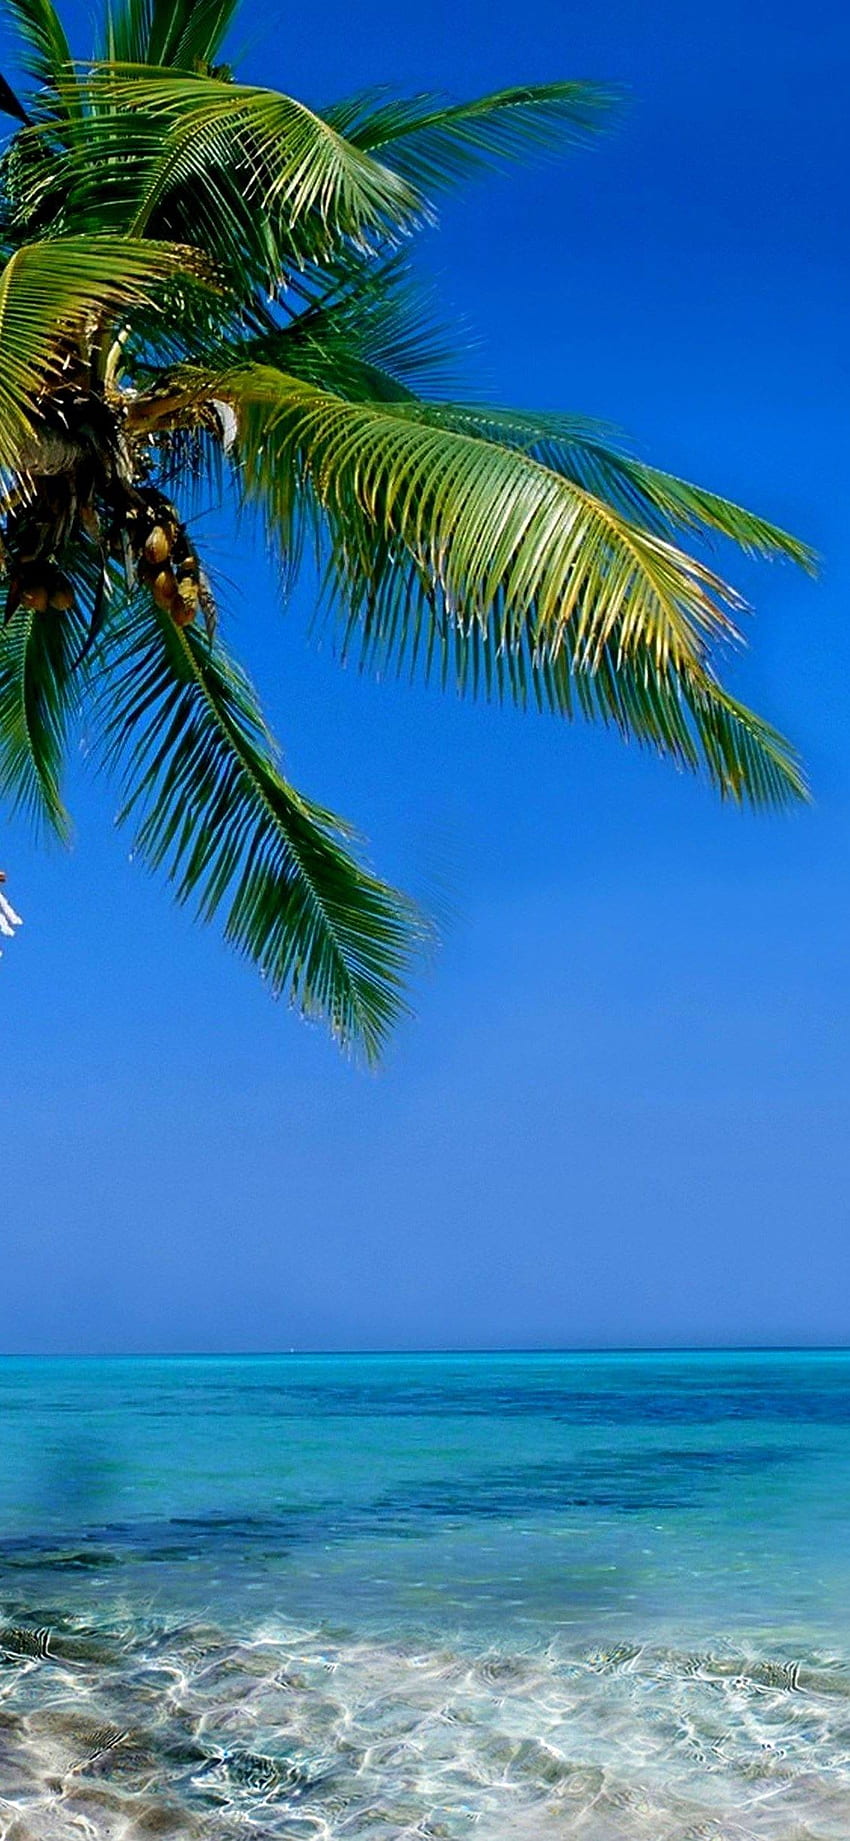 iPhone X ชายหาดเขตร้อน มหาสมุทร ชายฝั่งฮาวาย . ชายหาดเขตร้อน ธรรมชาติที่ดีที่สุด ธรรมชาติ ชายฝั่งเท็กซัส วอลล์เปเปอร์โทรศัพท์ HD